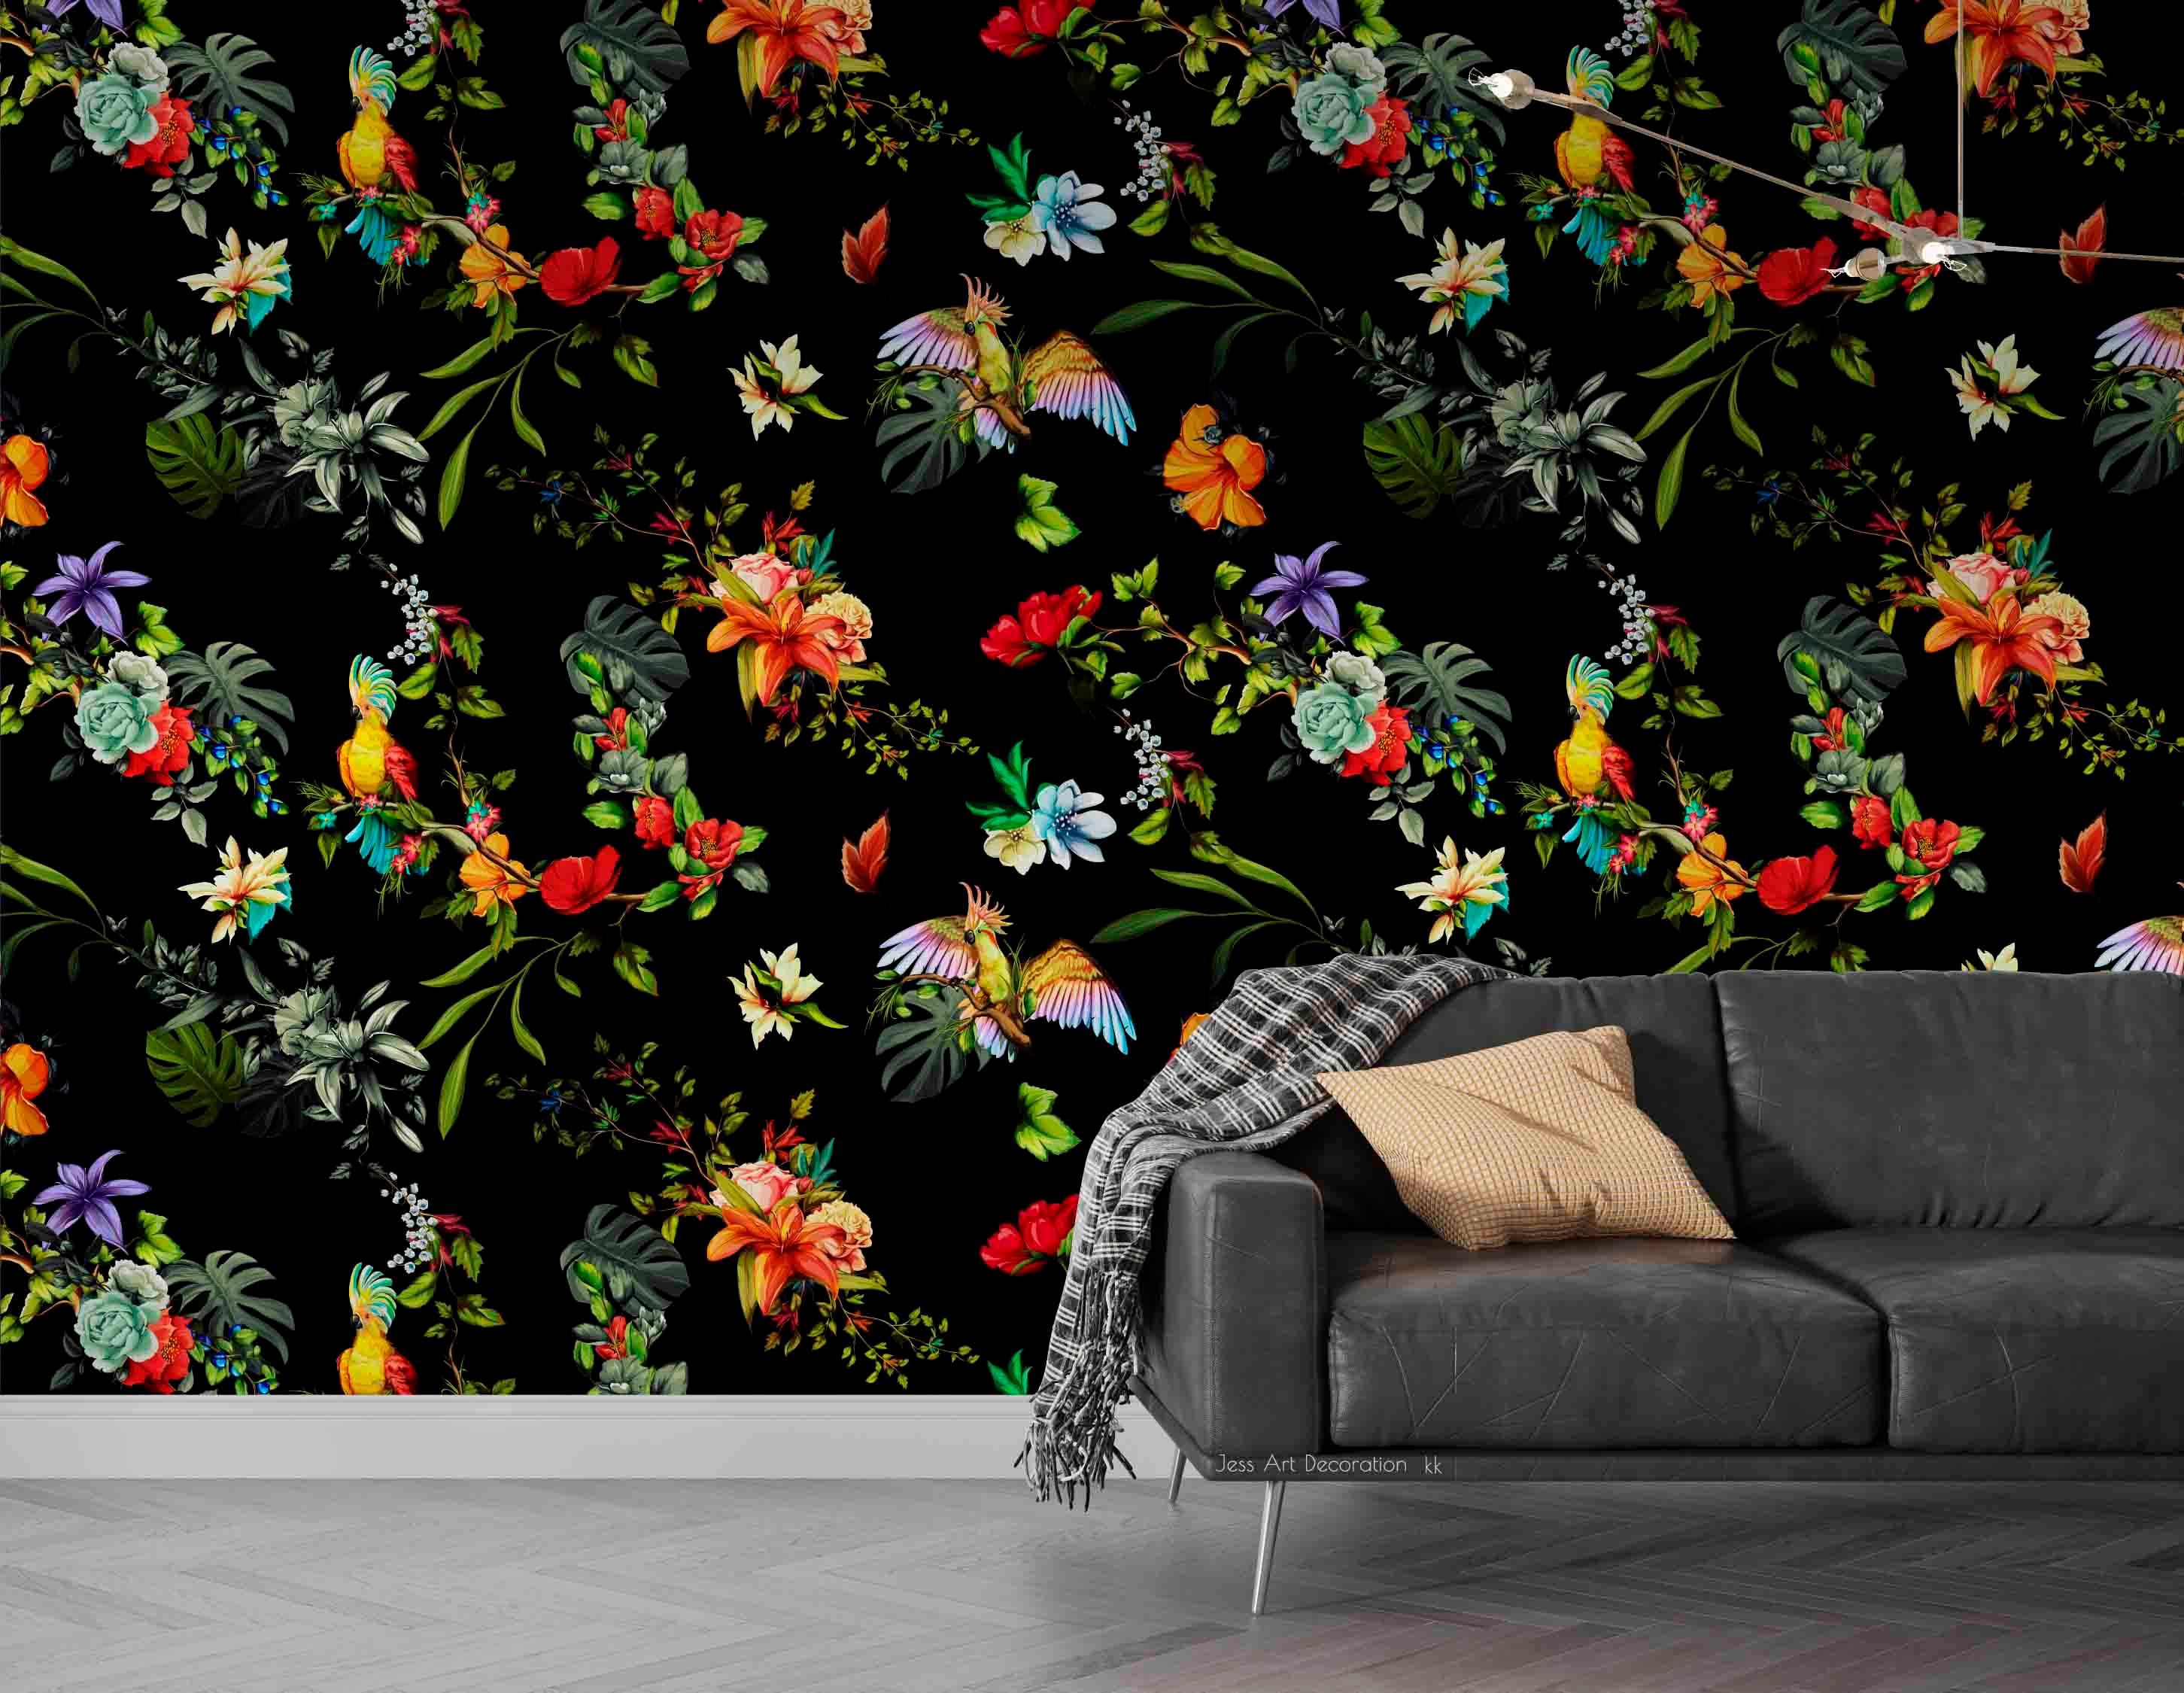 3D Vintage Pastoral Plants Flowers Black Background Wall Mural Wallpaper GD 3623- Jess Art Decoration